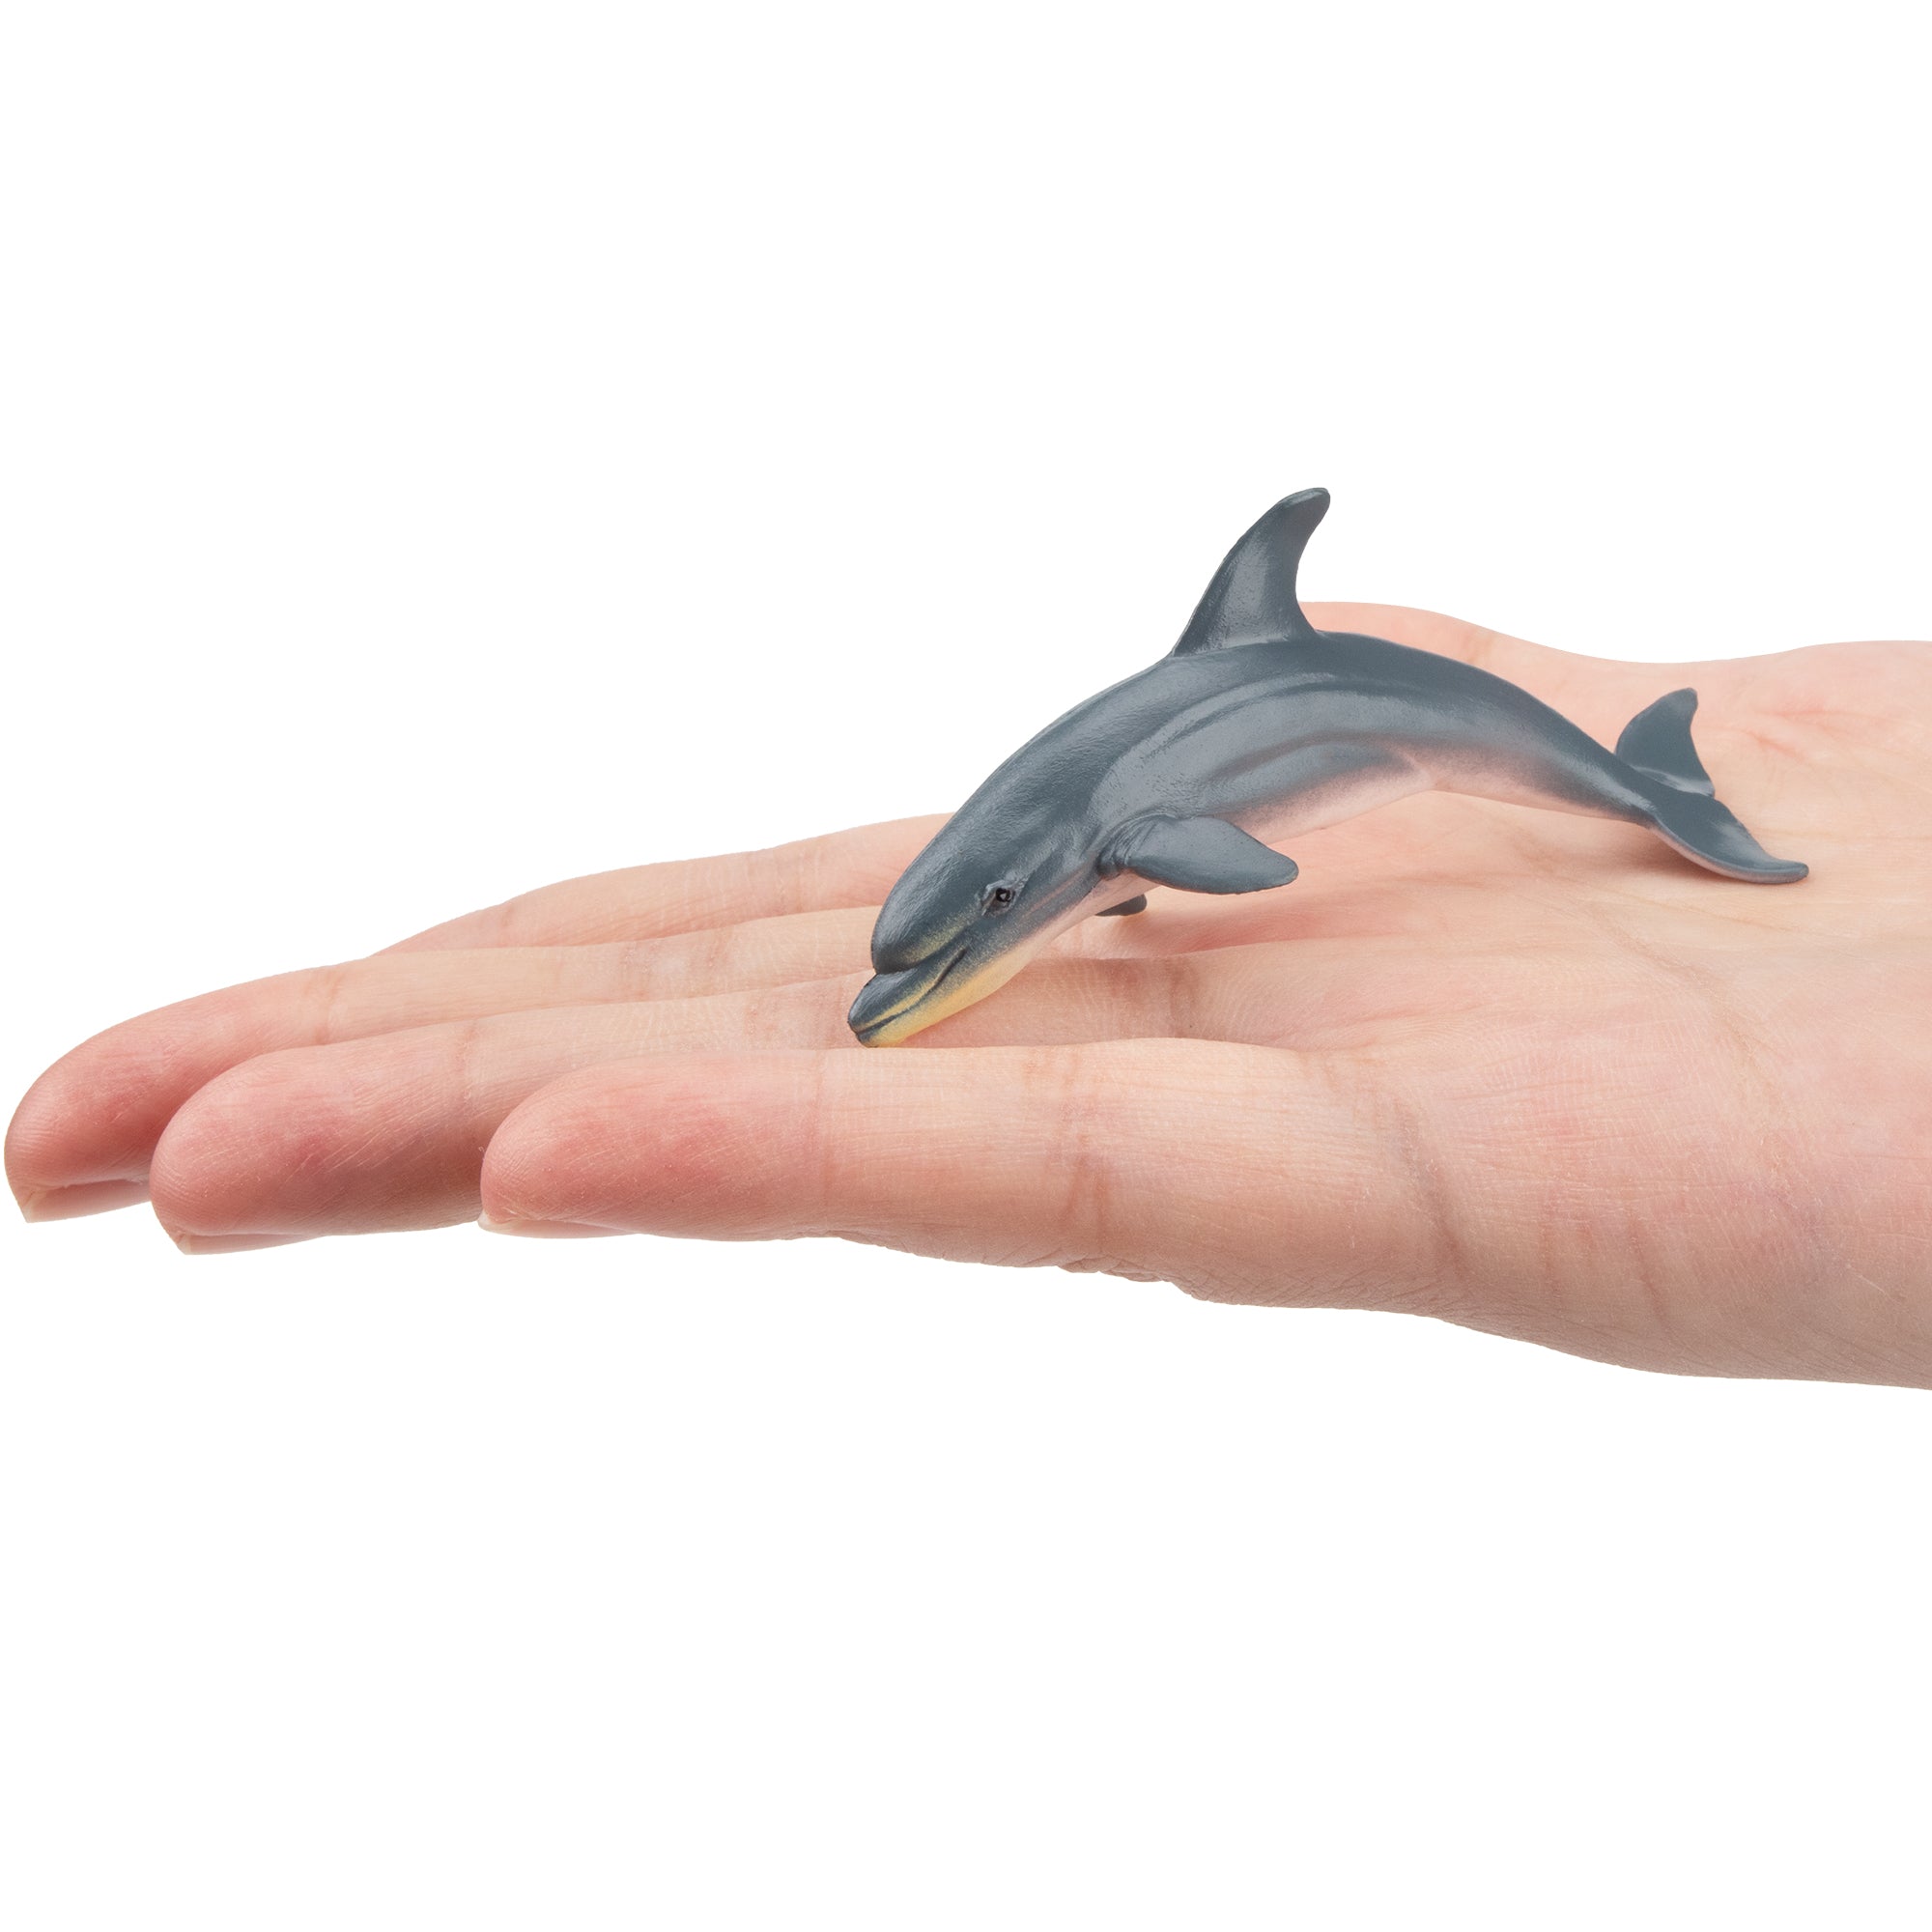 Toymany Dolphin Figurine Toy-on hand